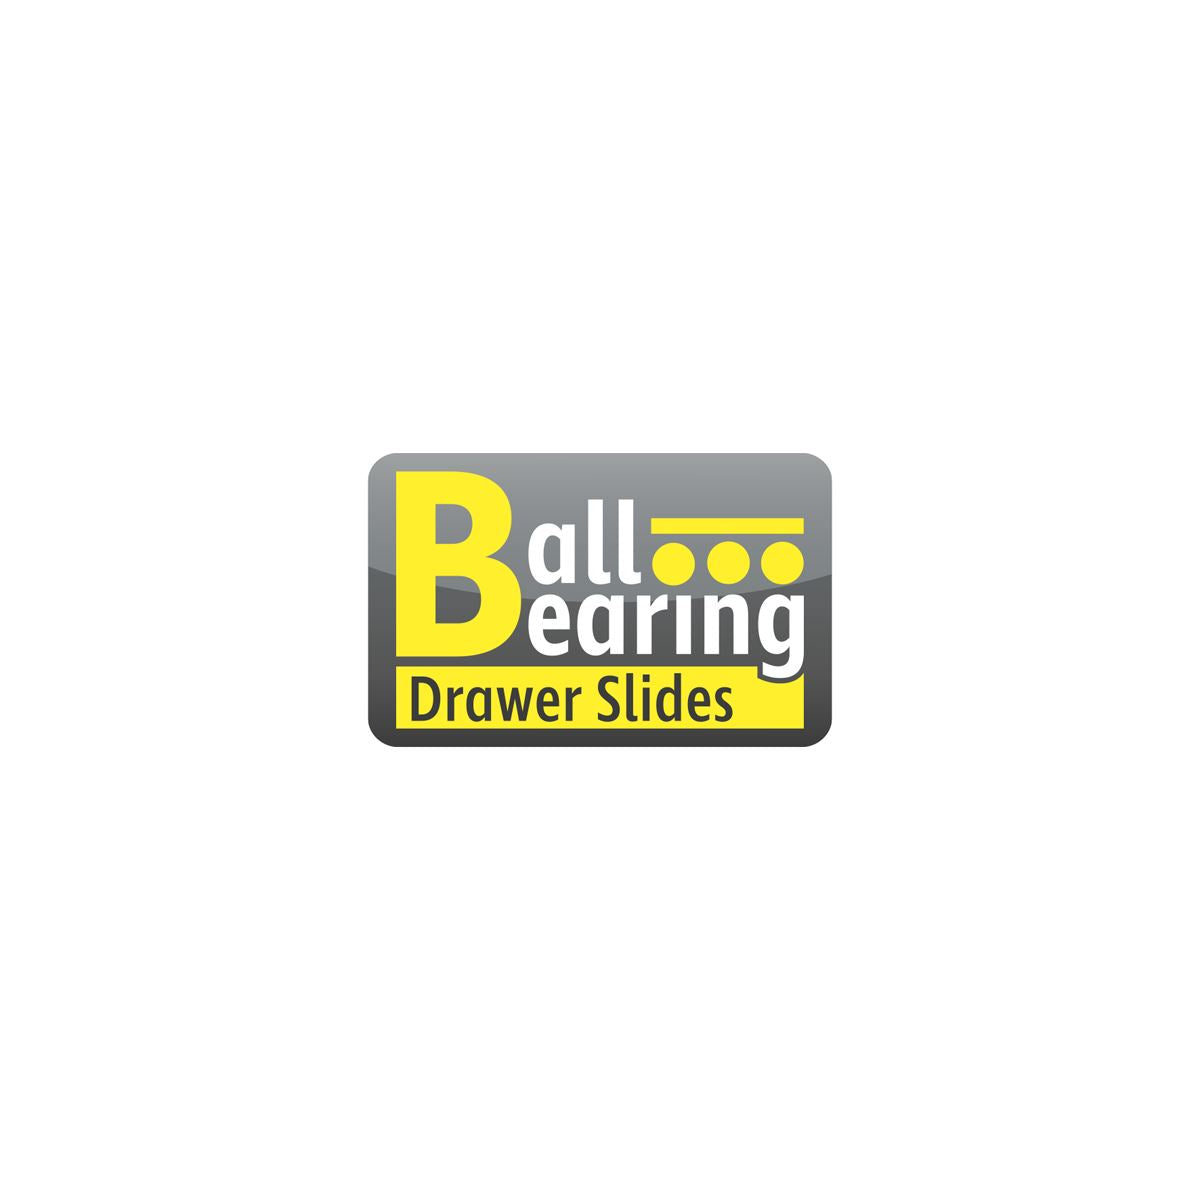 Sealey Topchest 5 Drawer with Ball Bearing Slides - Black AP33059B